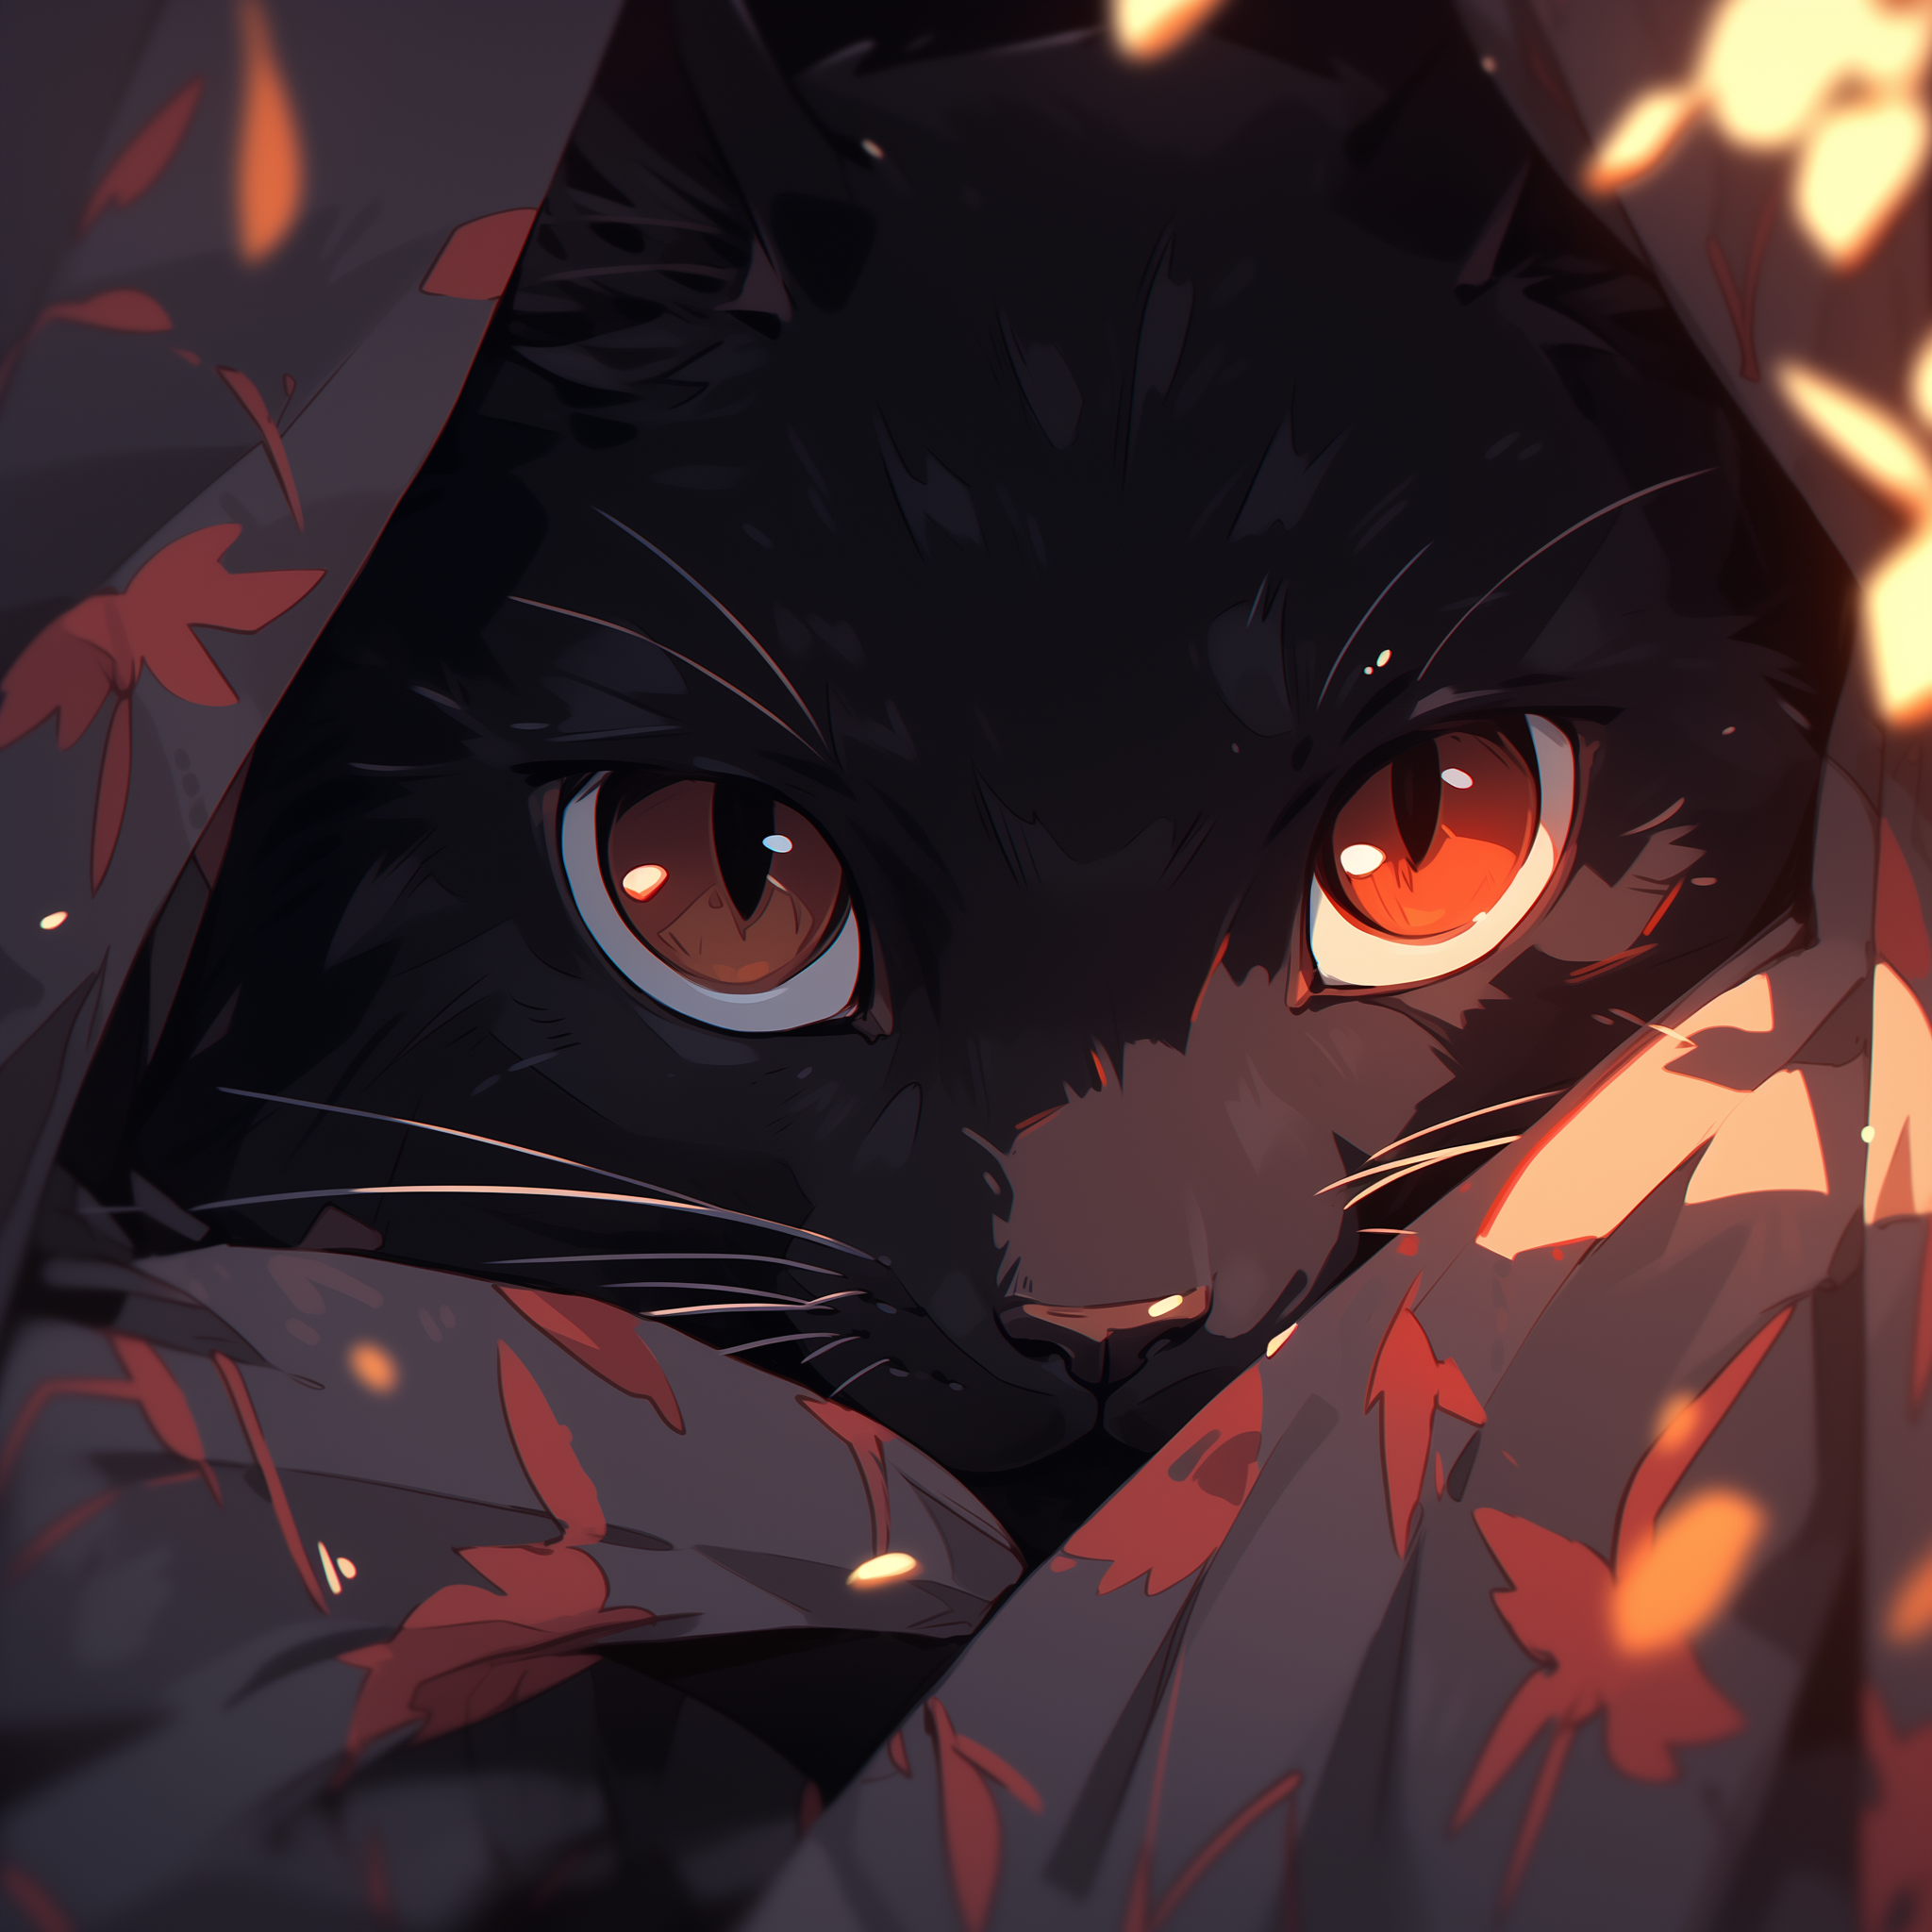 Avatar of an intense black cat with glowing eyes peeking through autumn leaves.